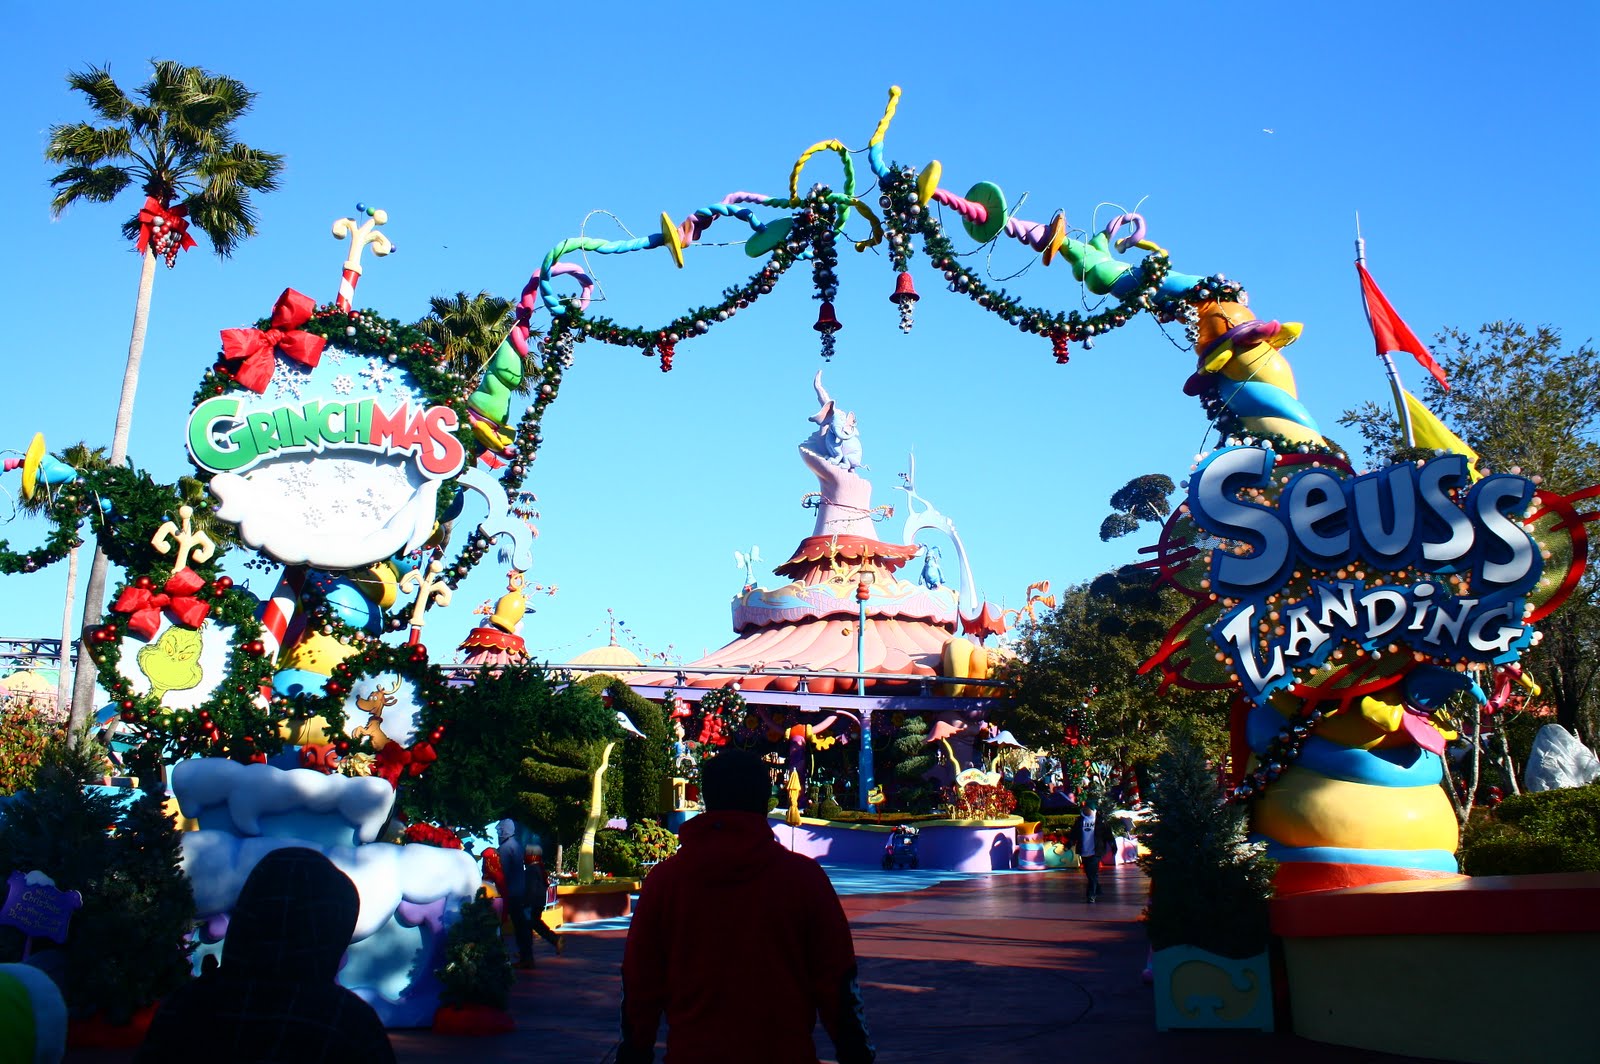 Dr Seuss Christmas Tree Decorations